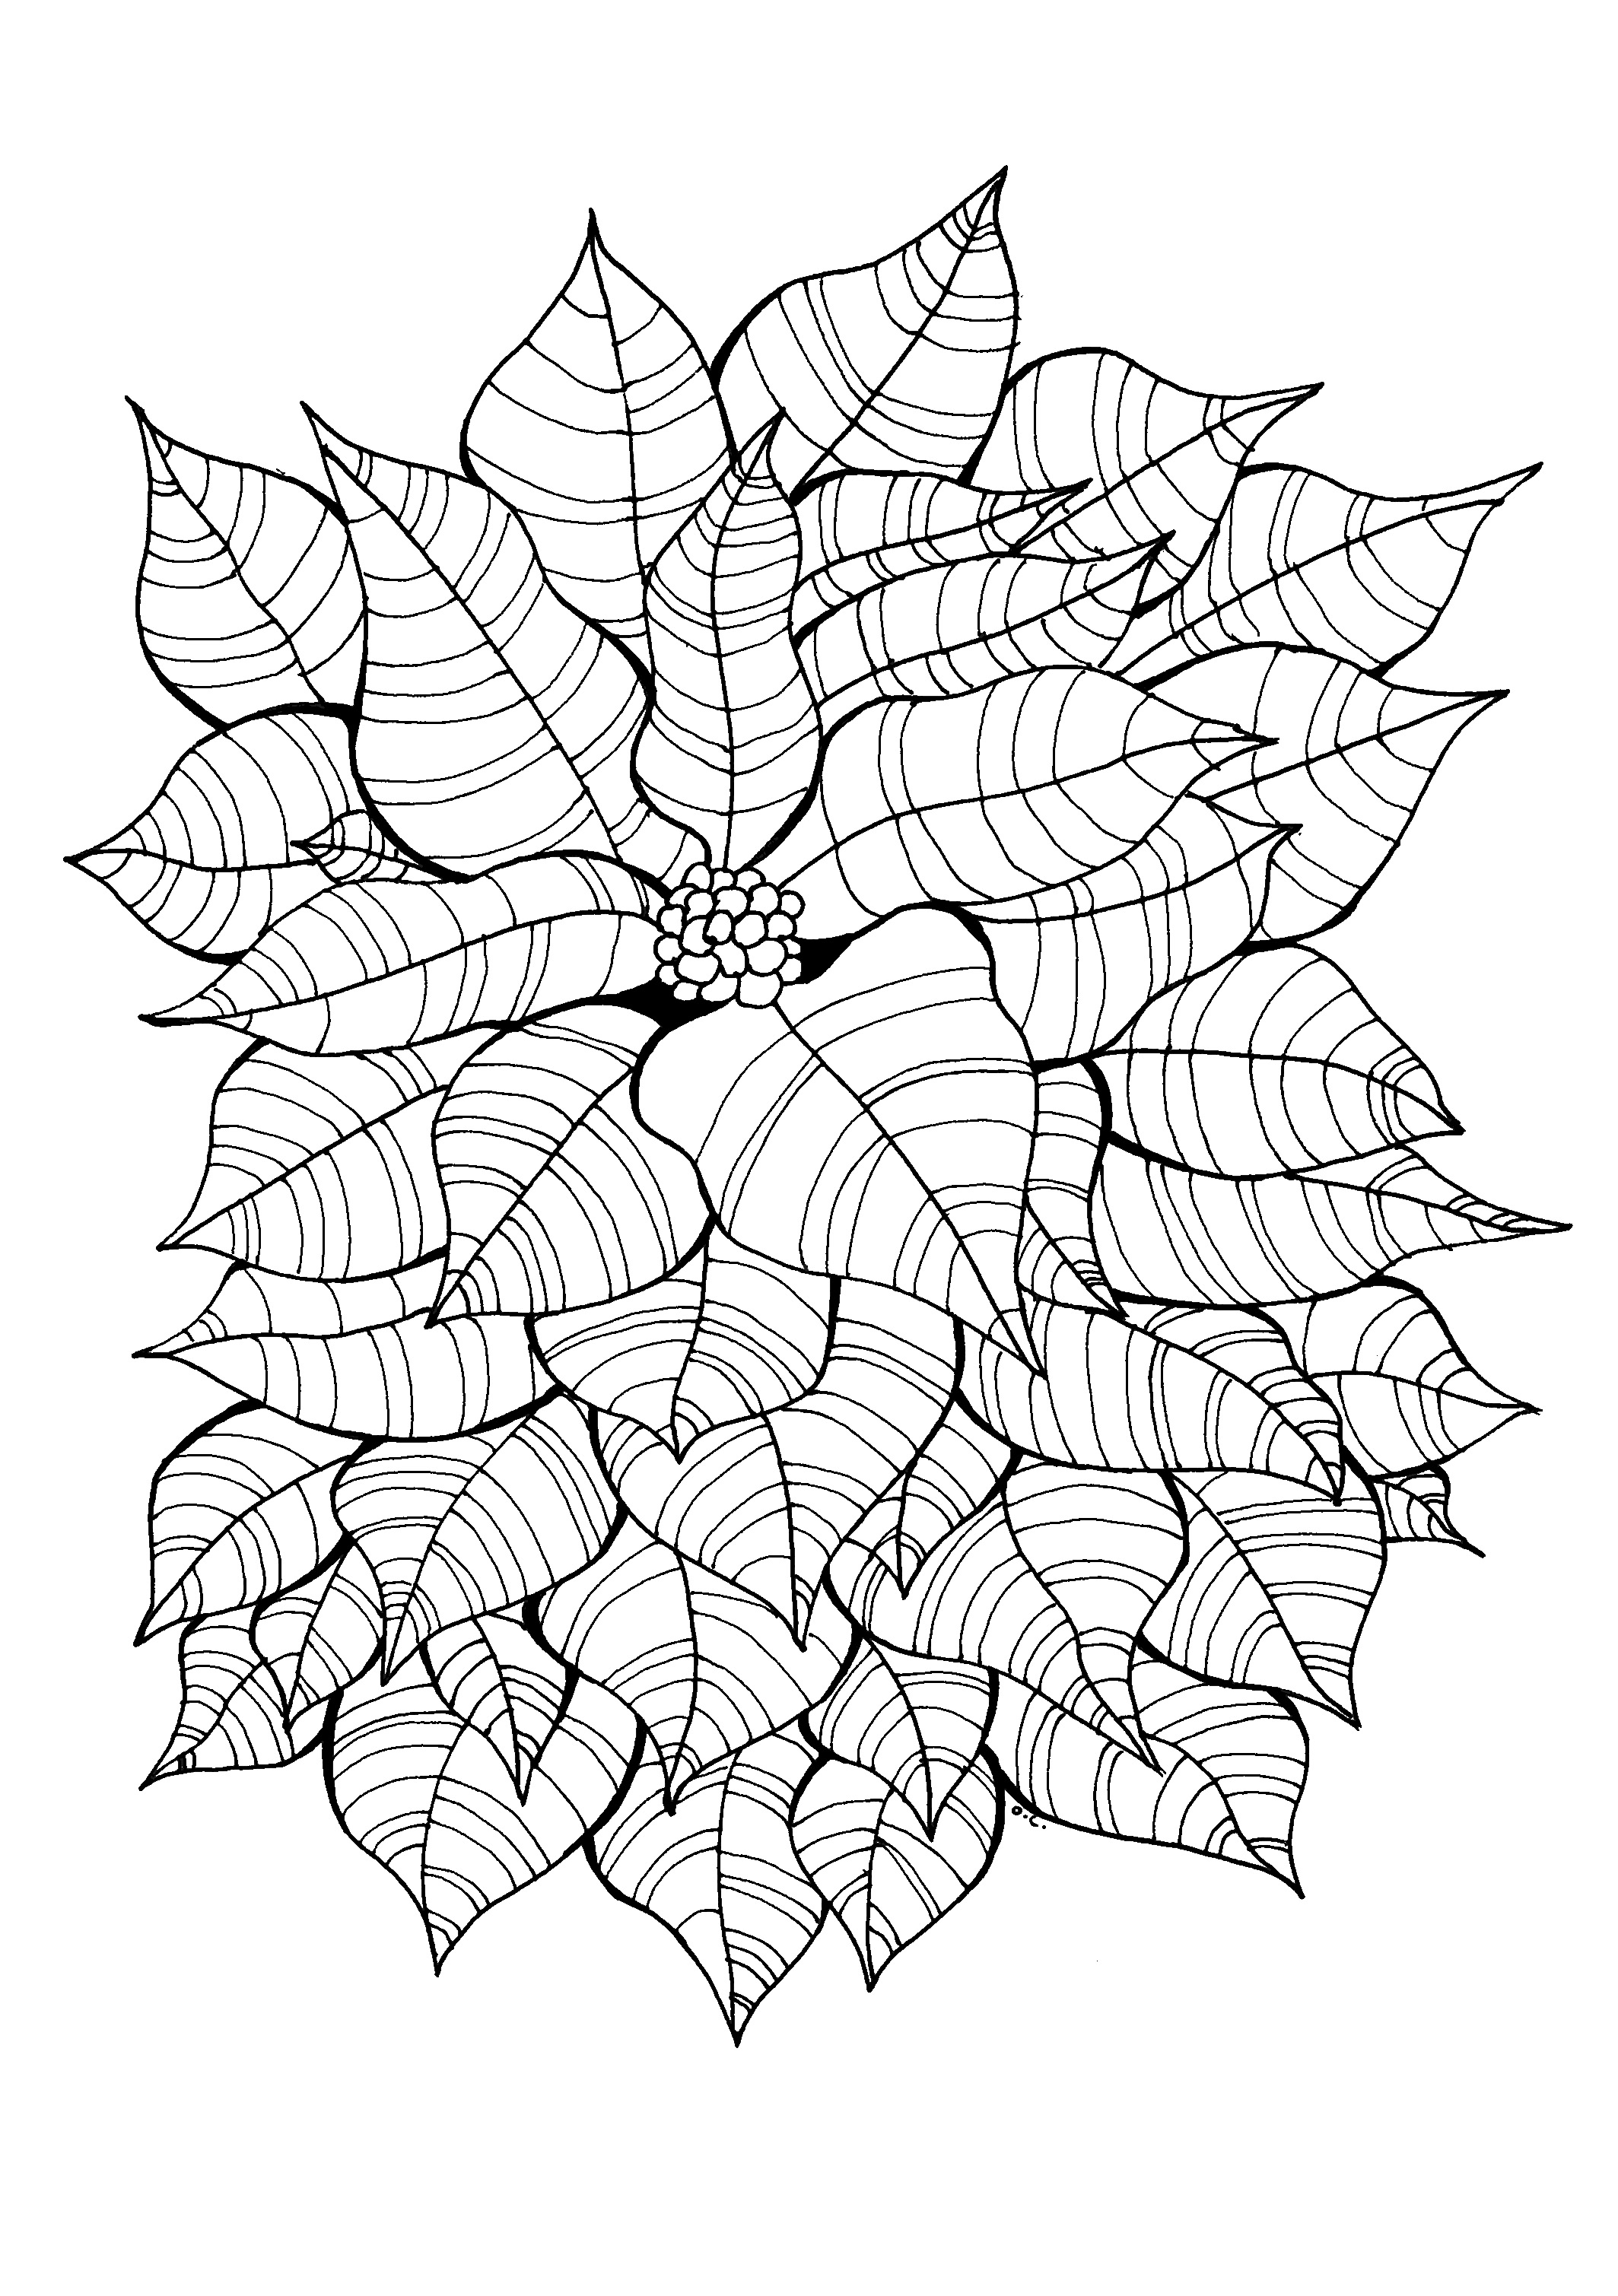 Leaves around a little flower, original drawing, Artist : Olivier